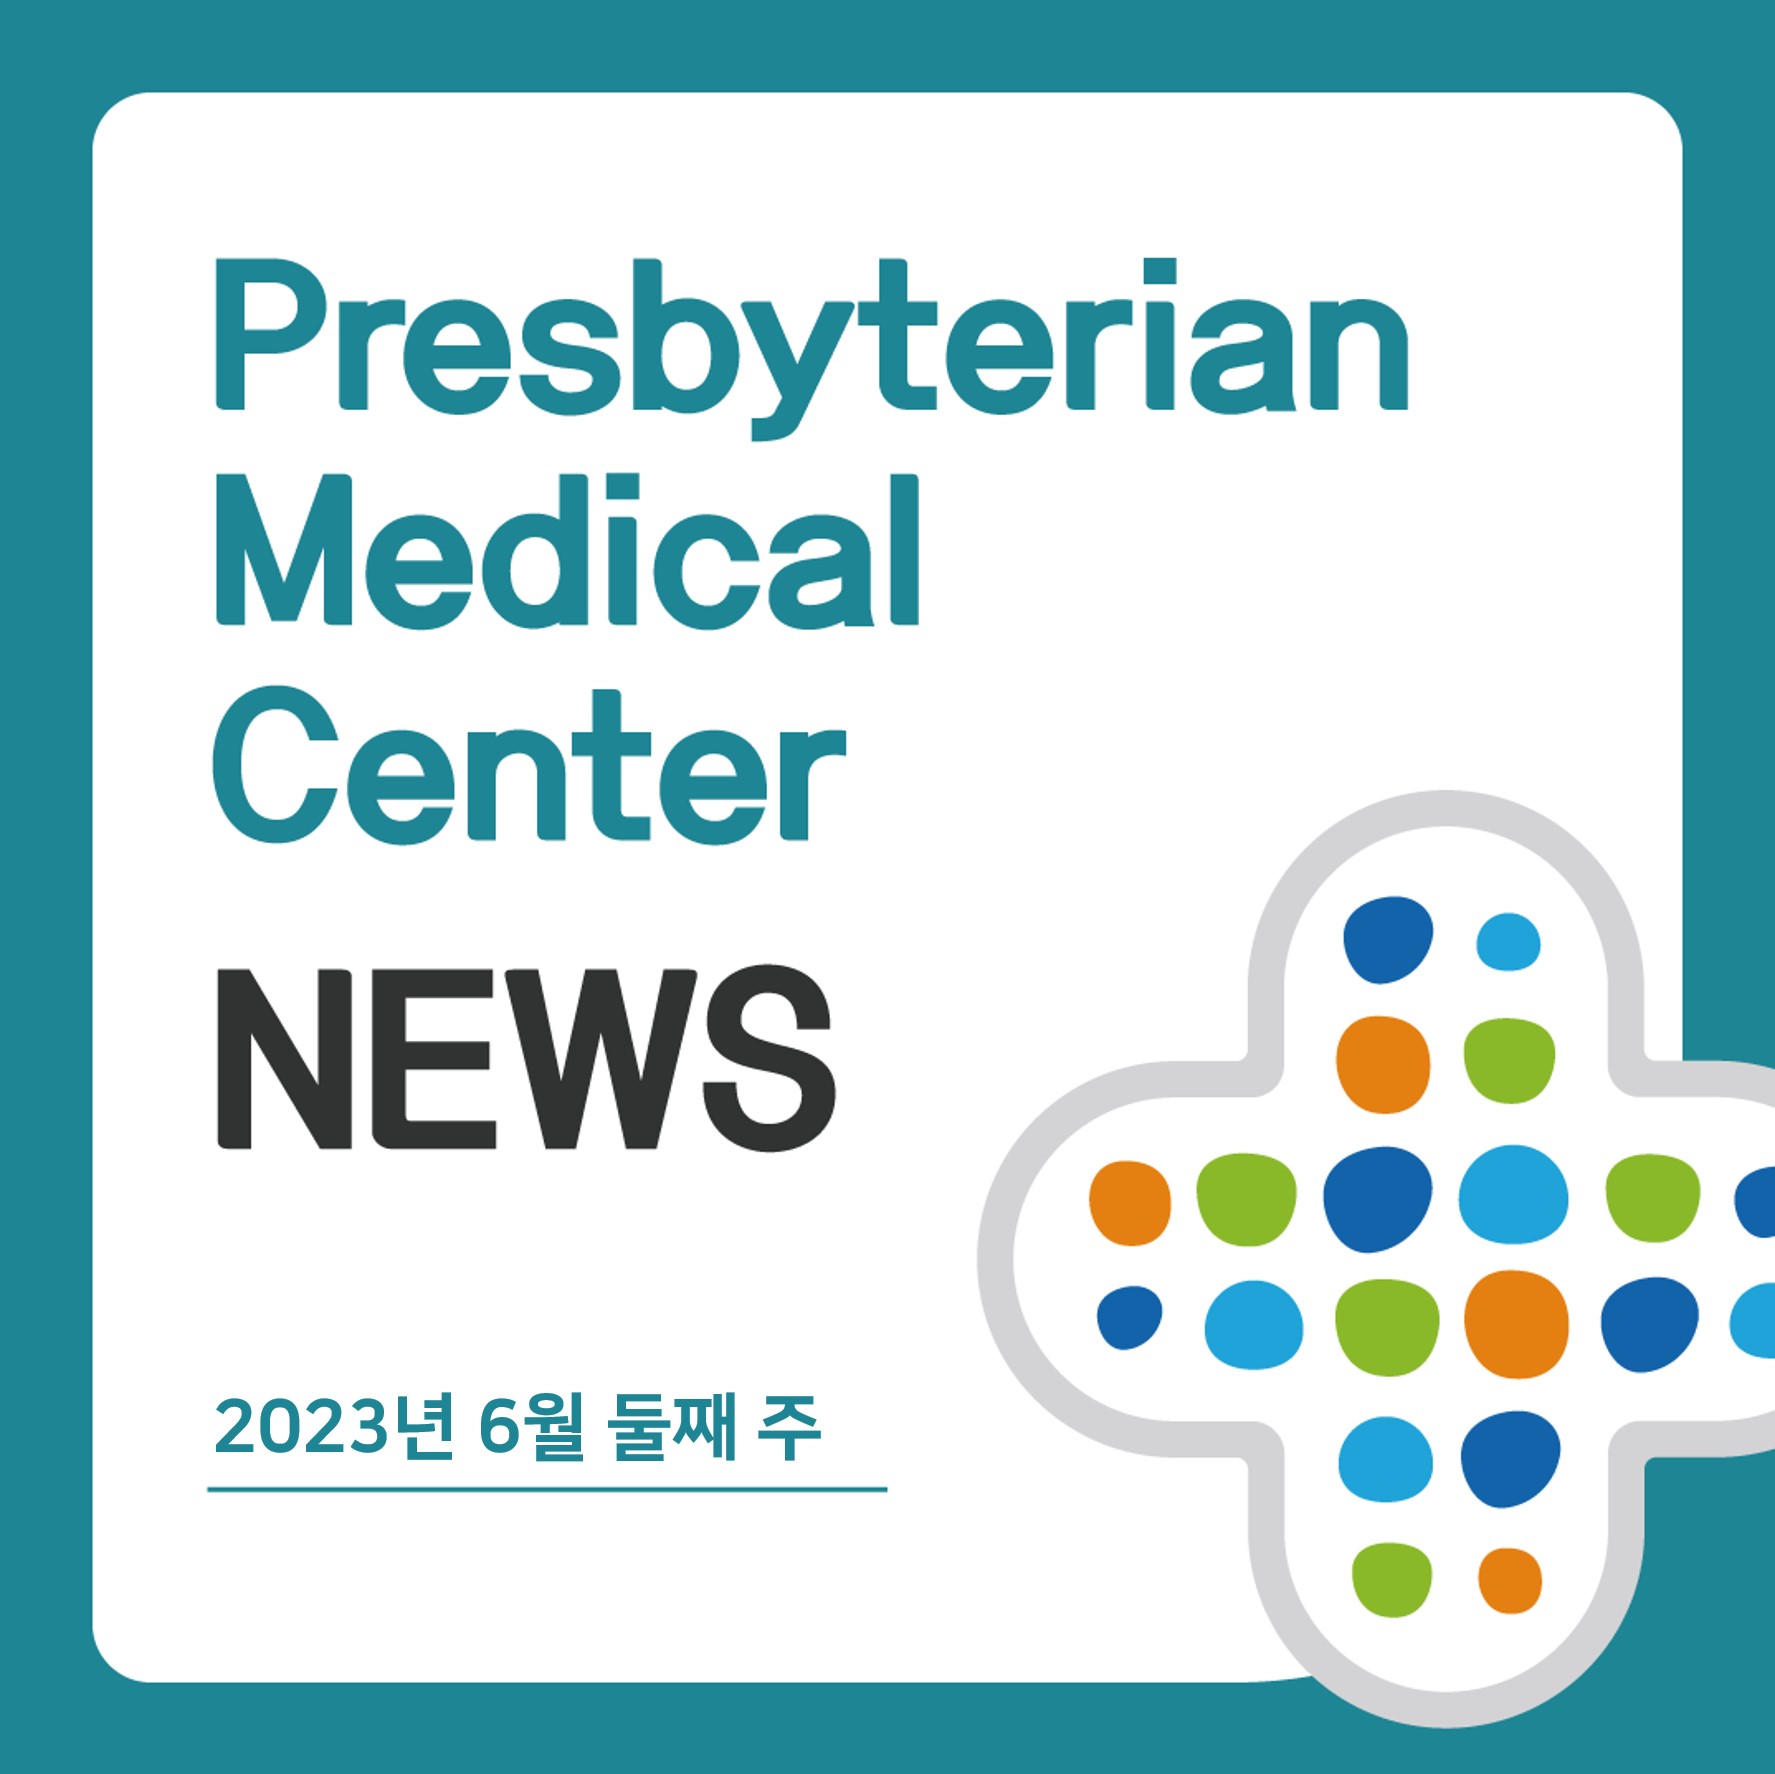 Presbyterian Medical Center
NEWS
2023년 6월 둘째 주